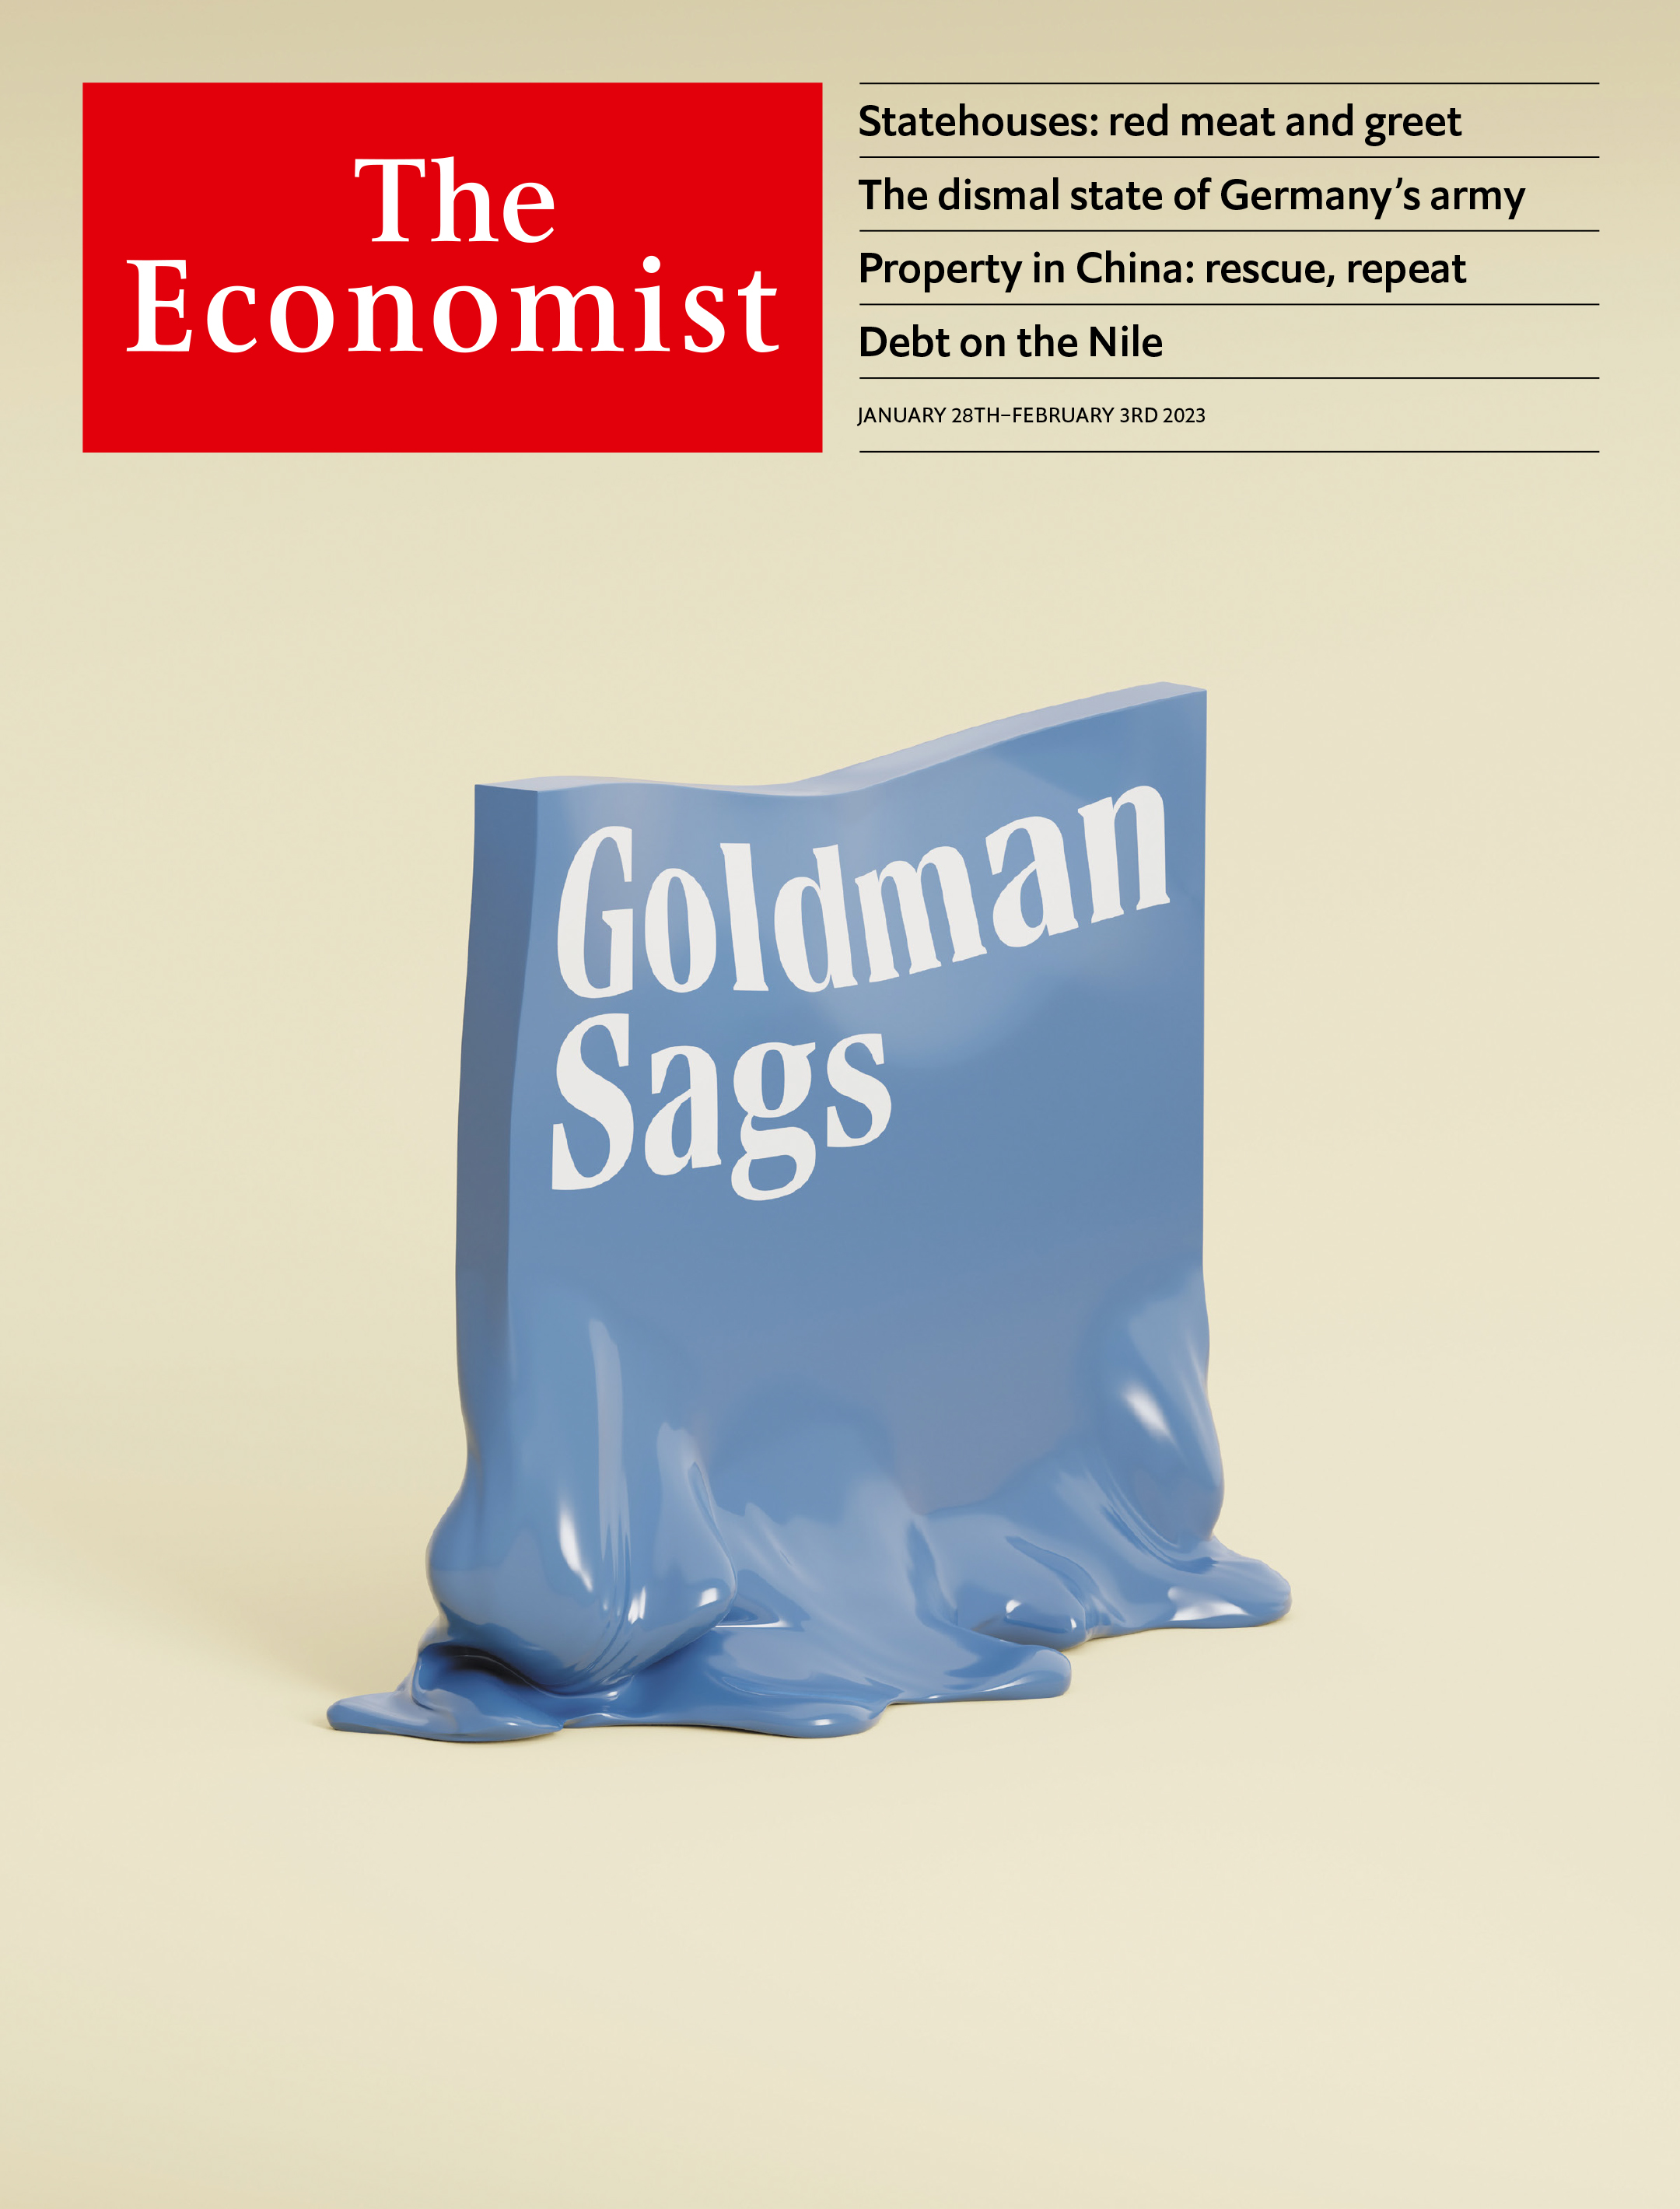 The Economist - "Goldman Sags," January 28–February 3, 2023